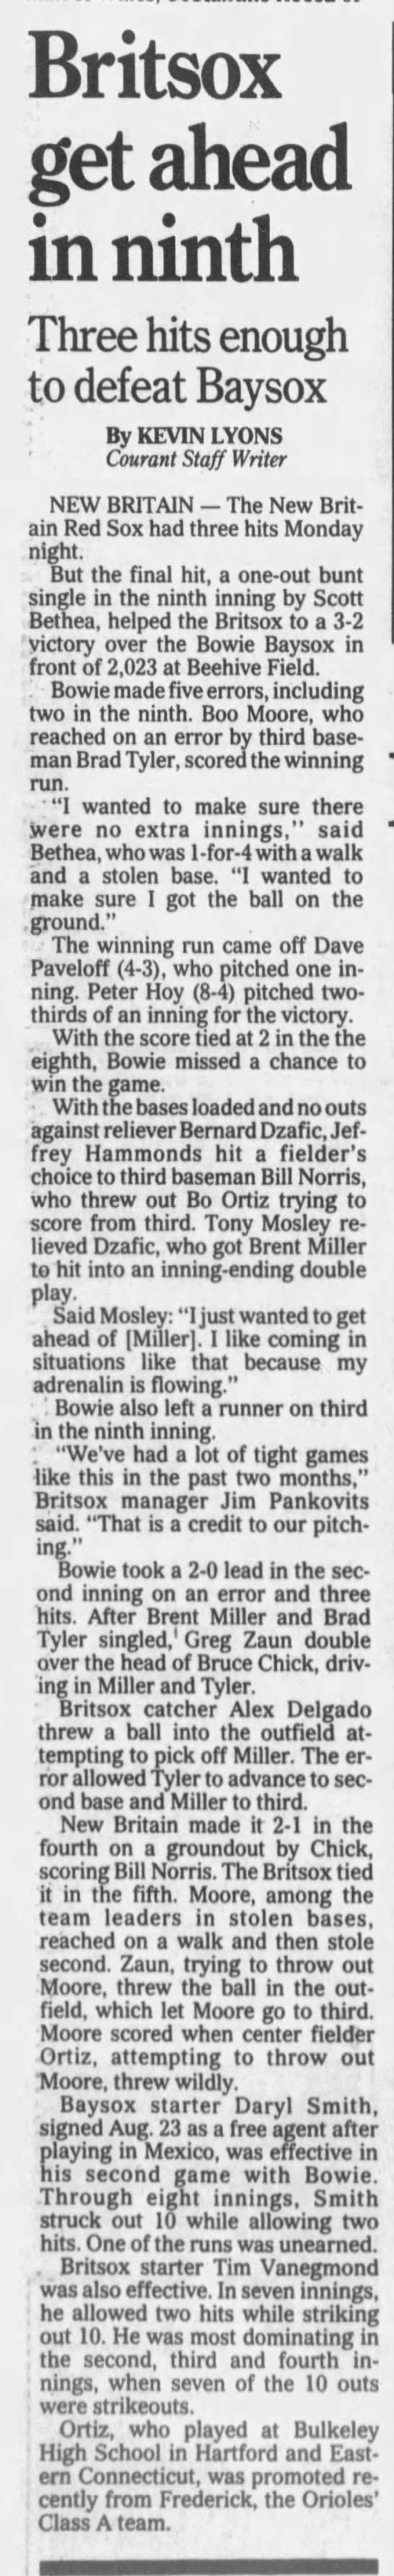 Tony Mosley - Aug. 31, 1993 - Greatest21Days.com - 